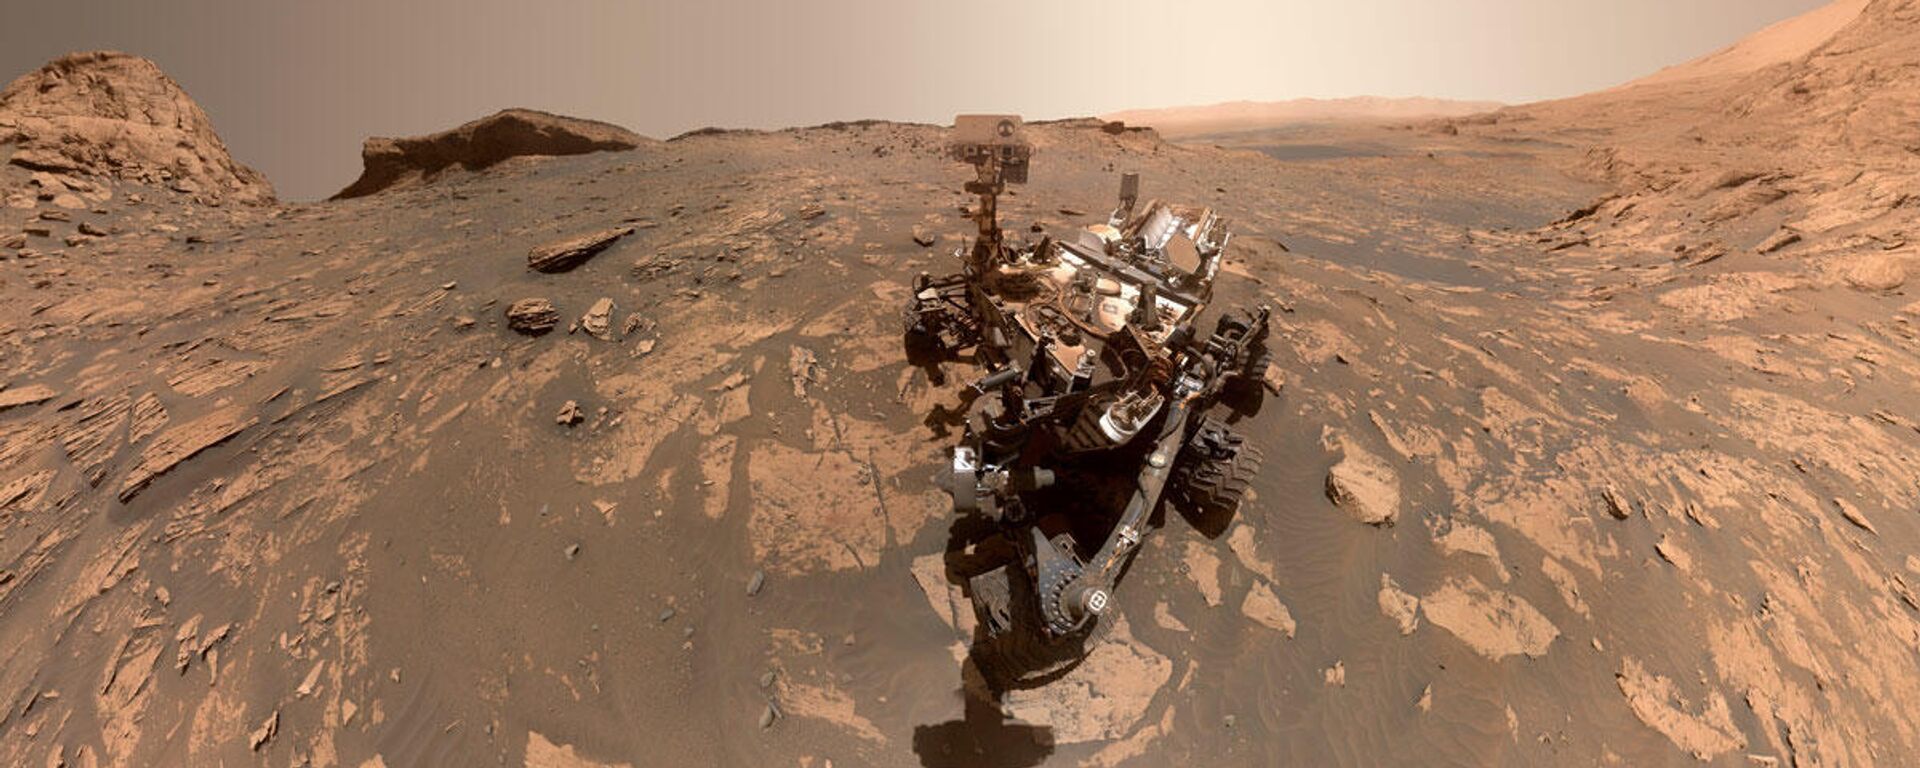 Una selfi del róver Curiosity tomada en Marte - Sputnik Mundo, 1920, 07.06.2022